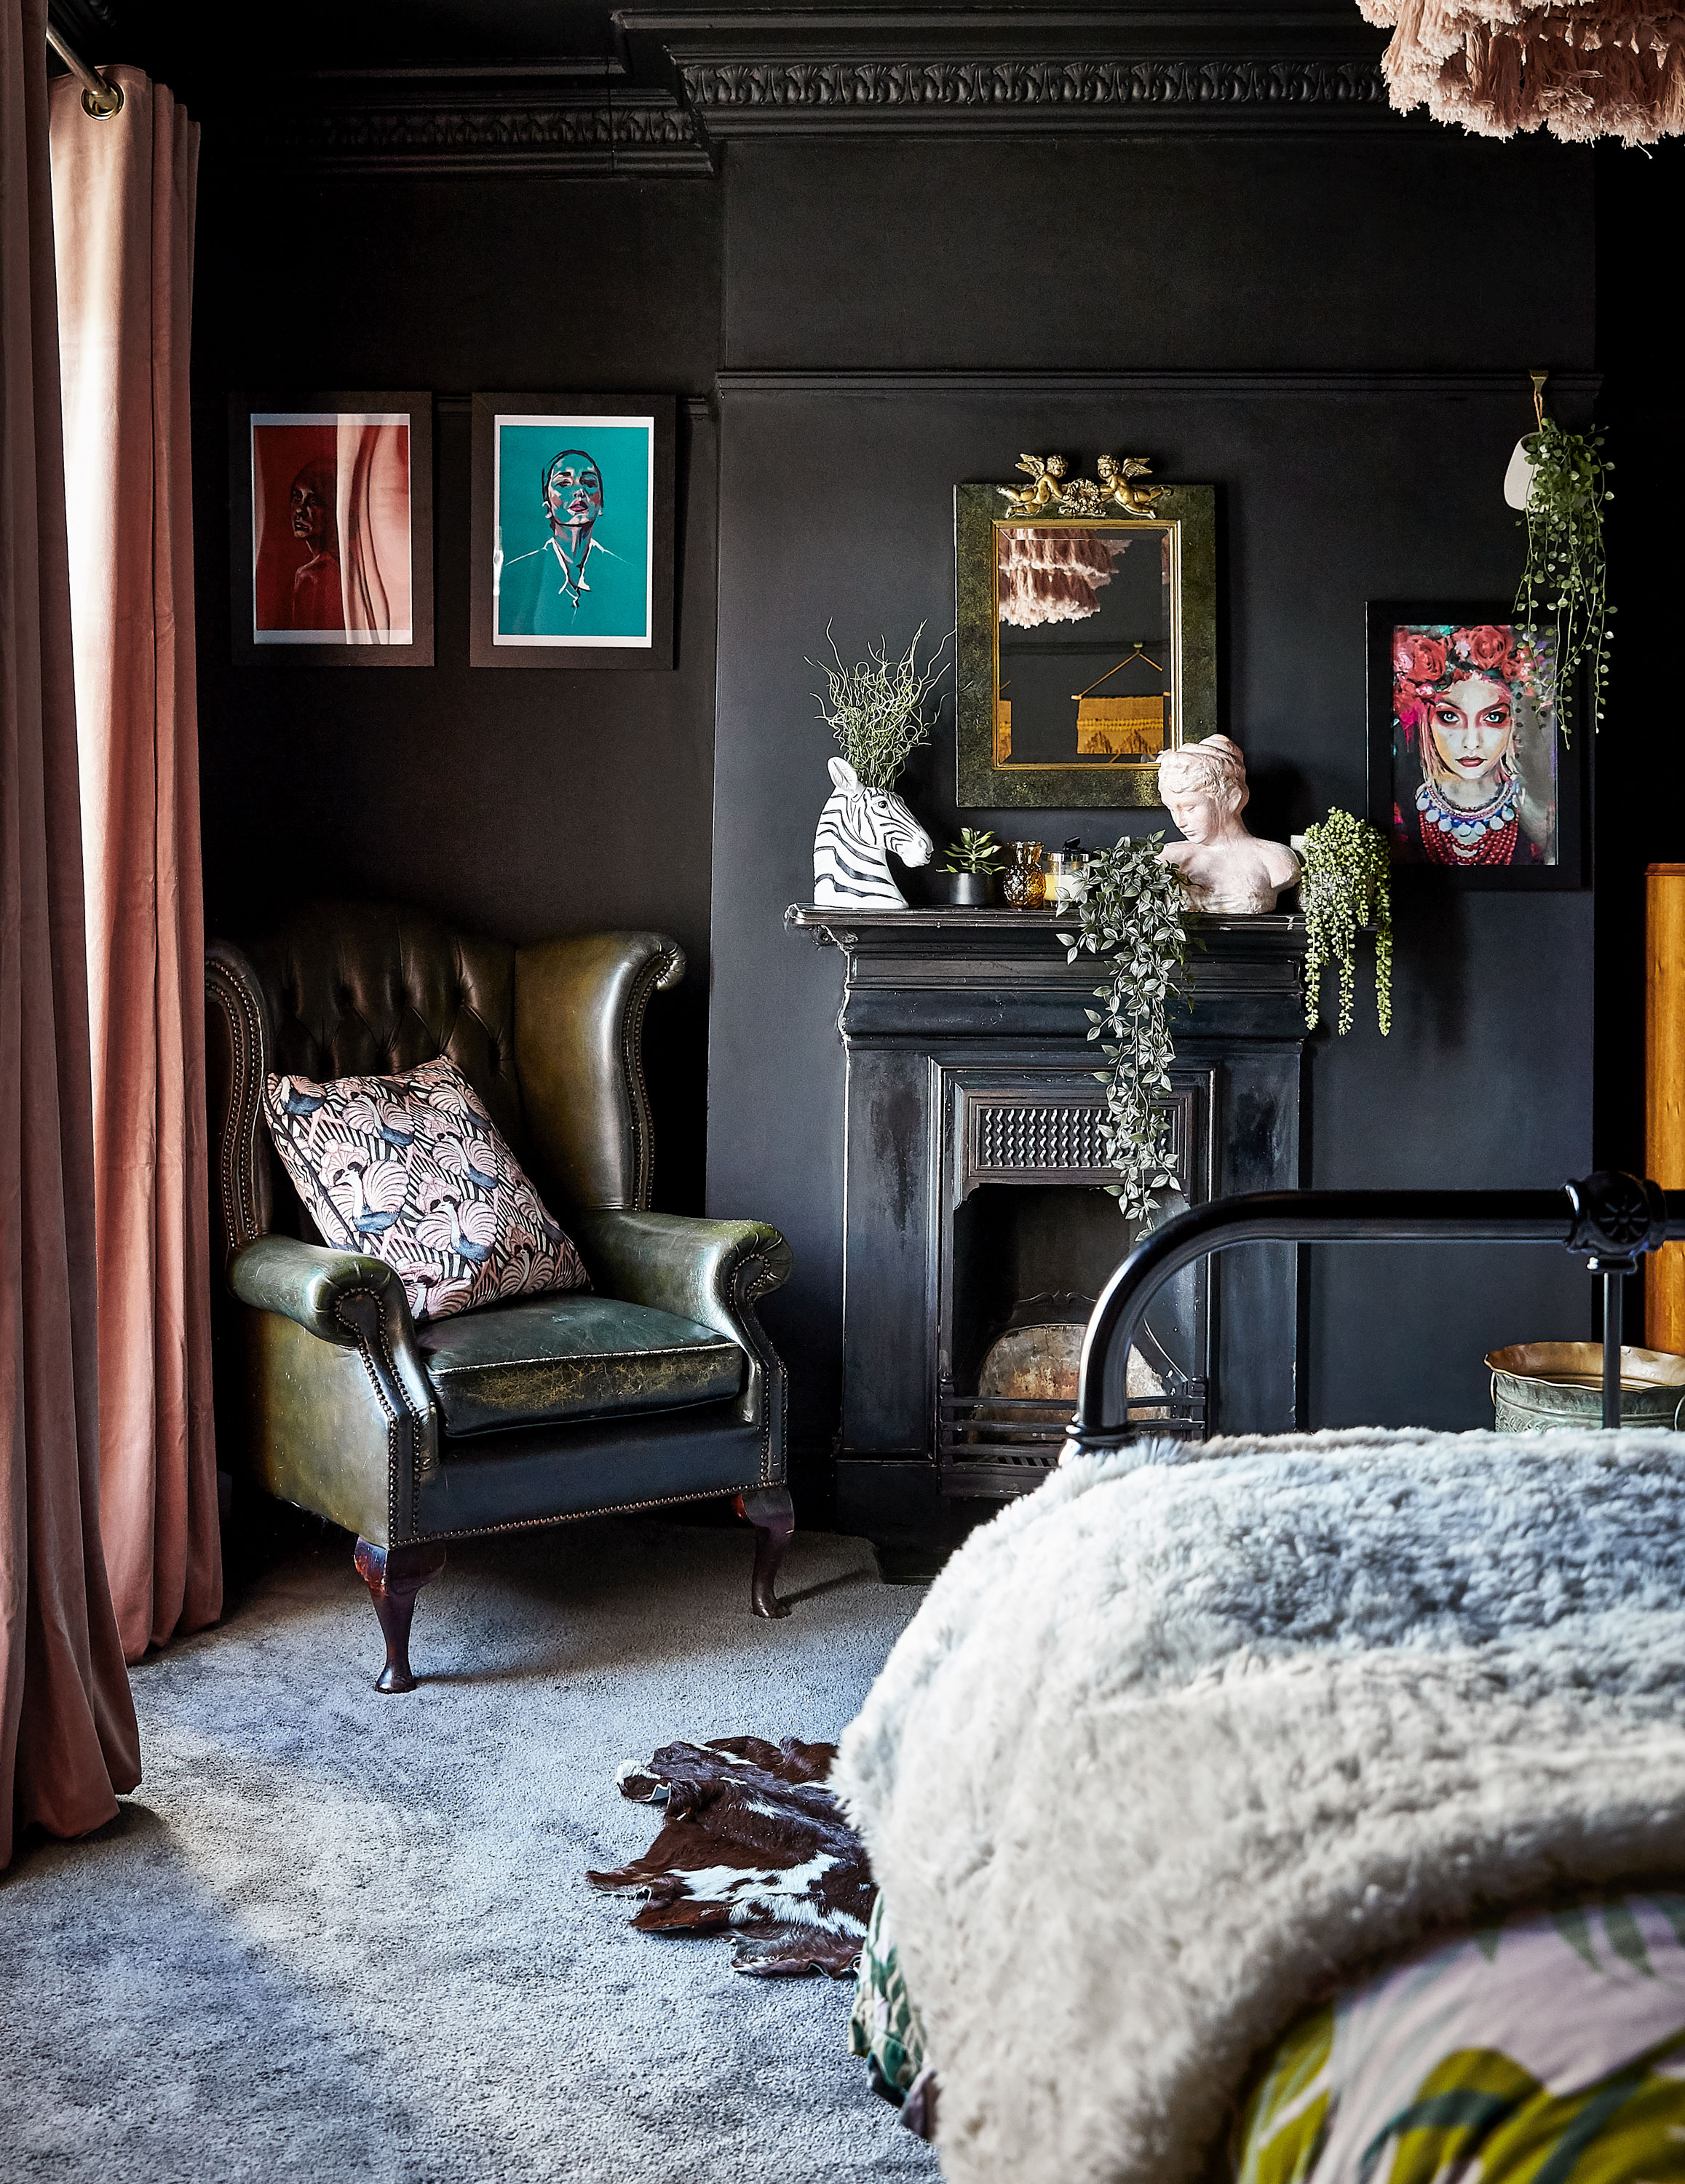 16 Dark Interior Design Ideas To, How To Decorate A Room With Dark Carpet